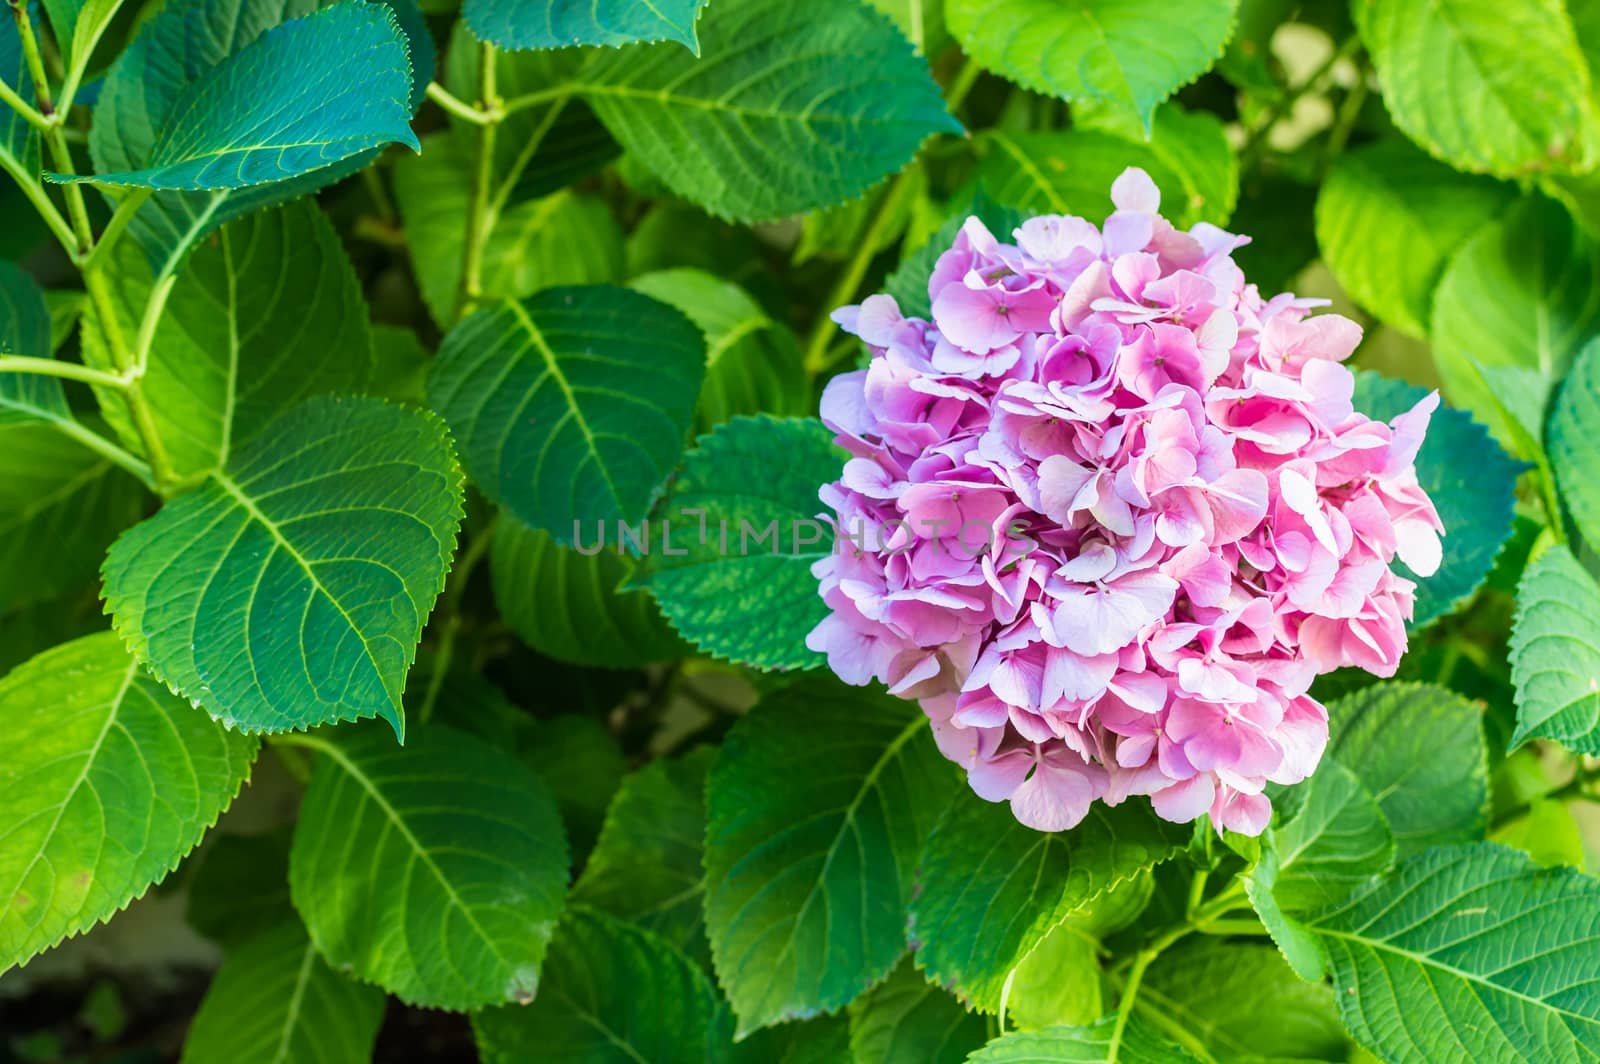 pink flowers in the garden by okskukuruza